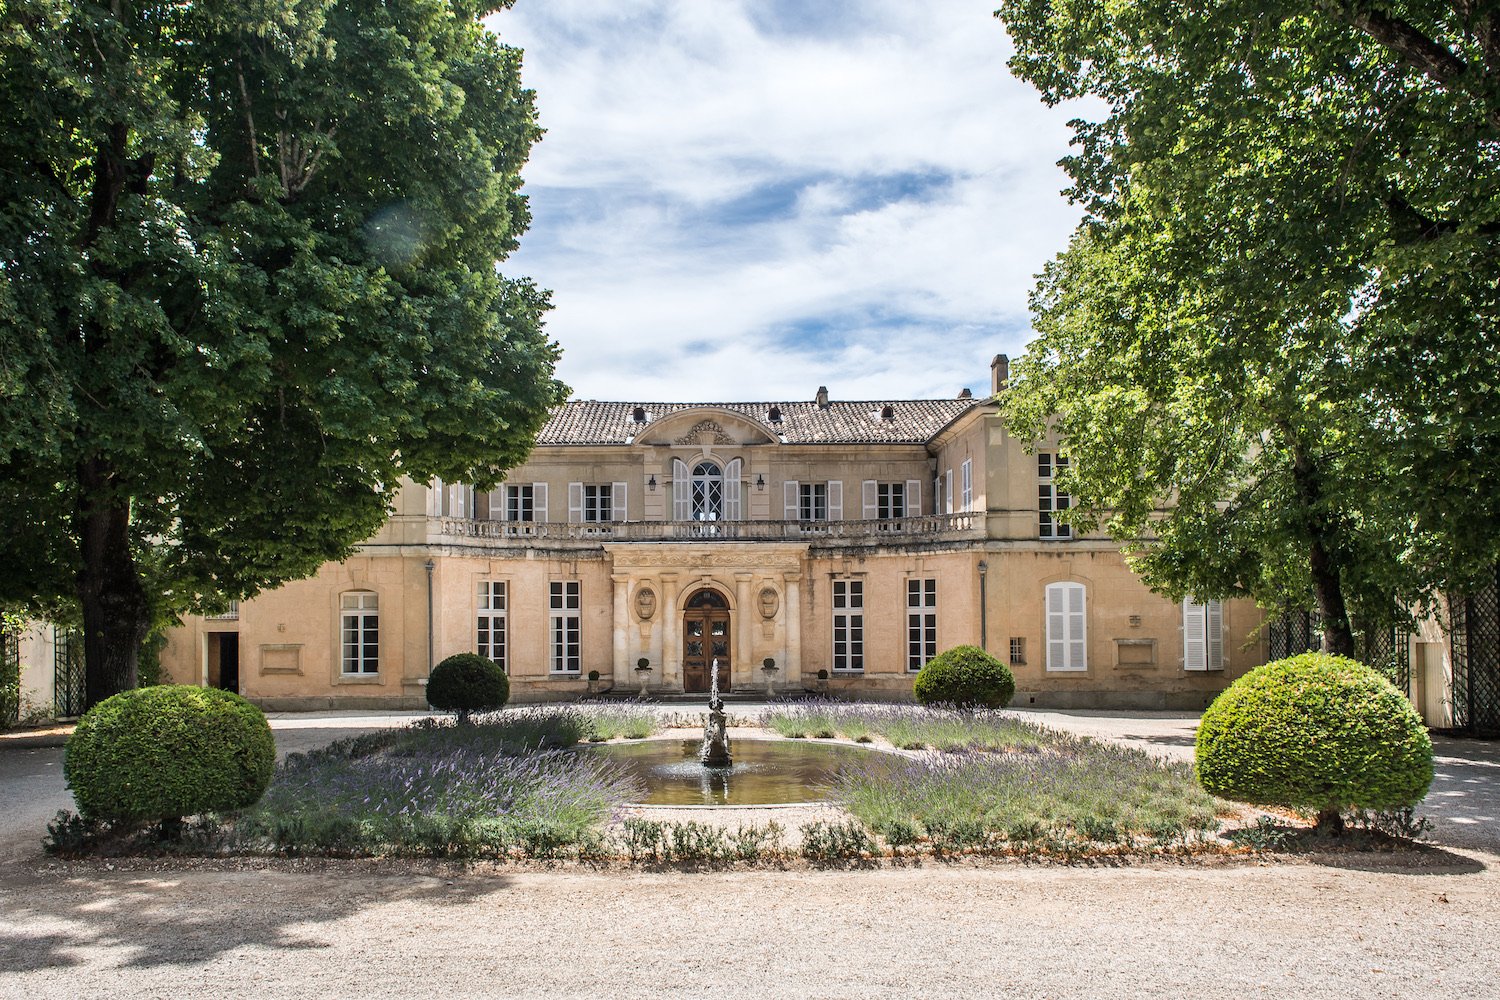 Avignon château d'exception to organize a seminar with Homanie